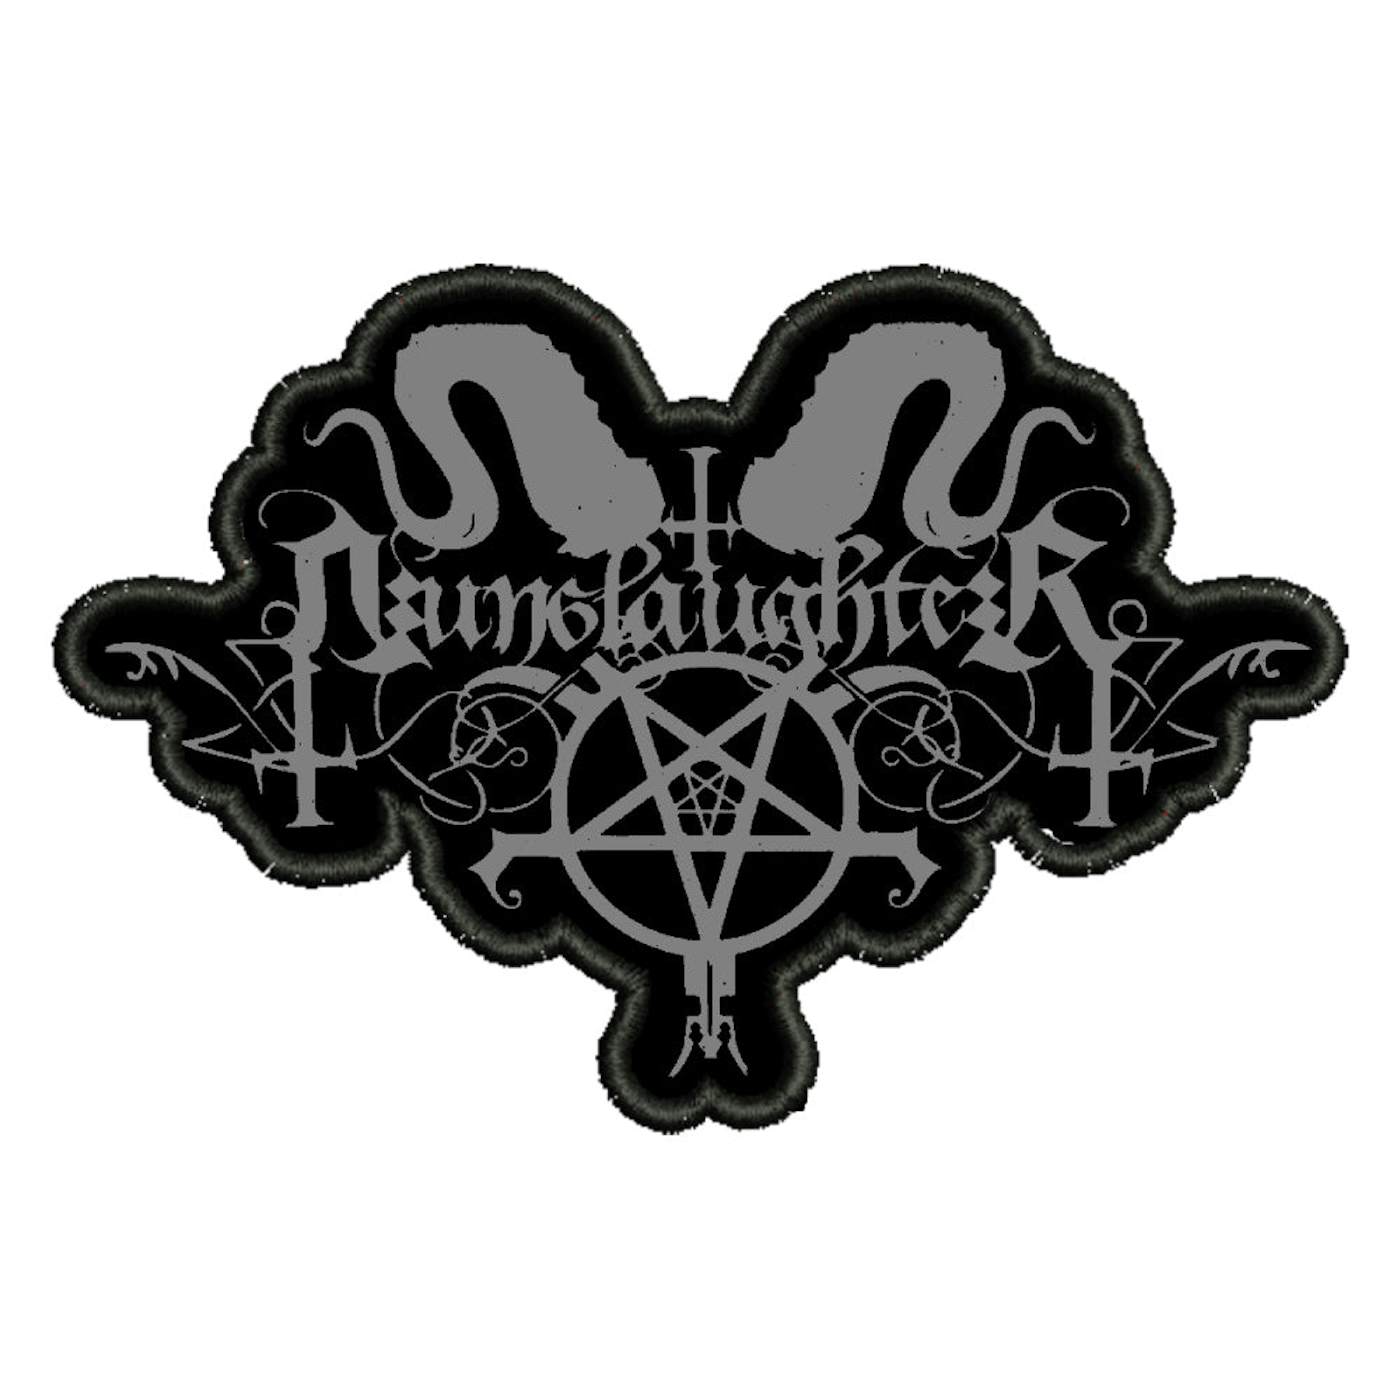 Nunslaughter "Logo #5" Patch